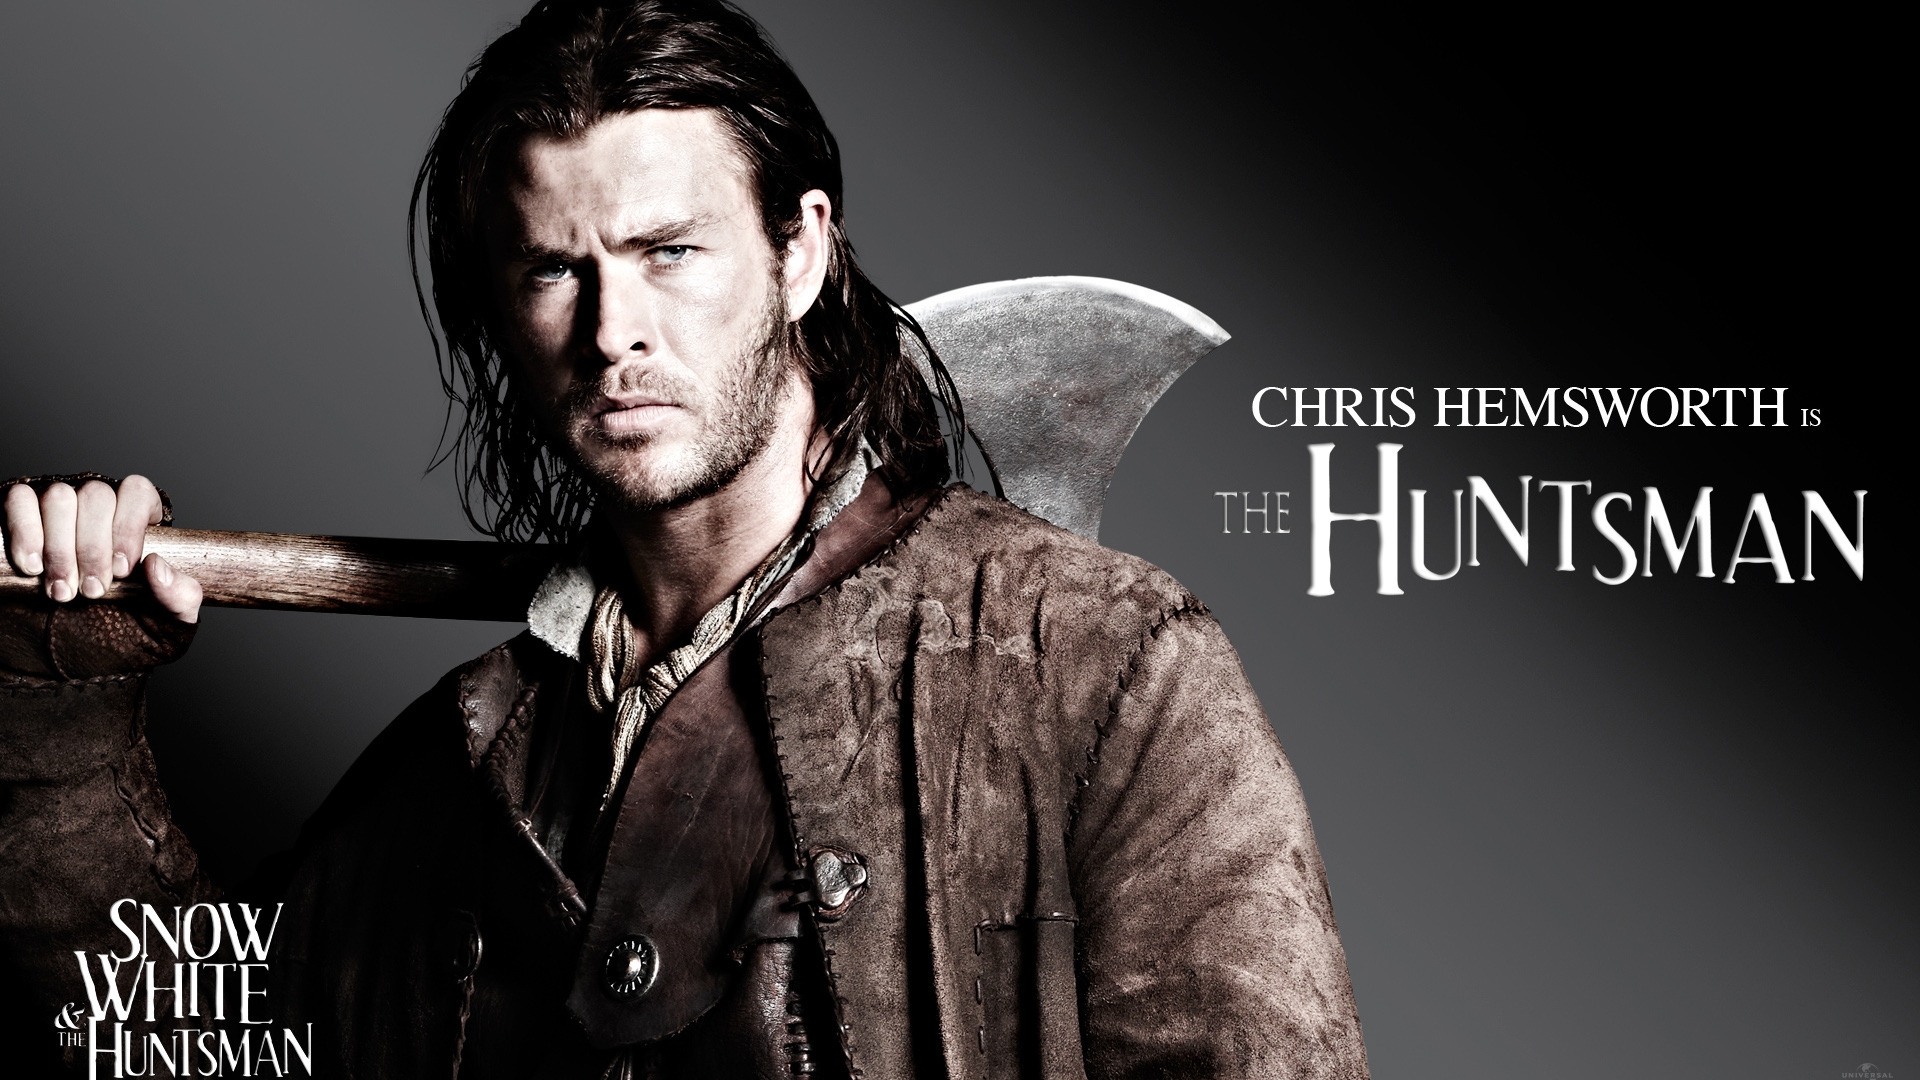 Chris Hemsworth the Huntsman for 1920 x 1080 HDTV 1080p resolution